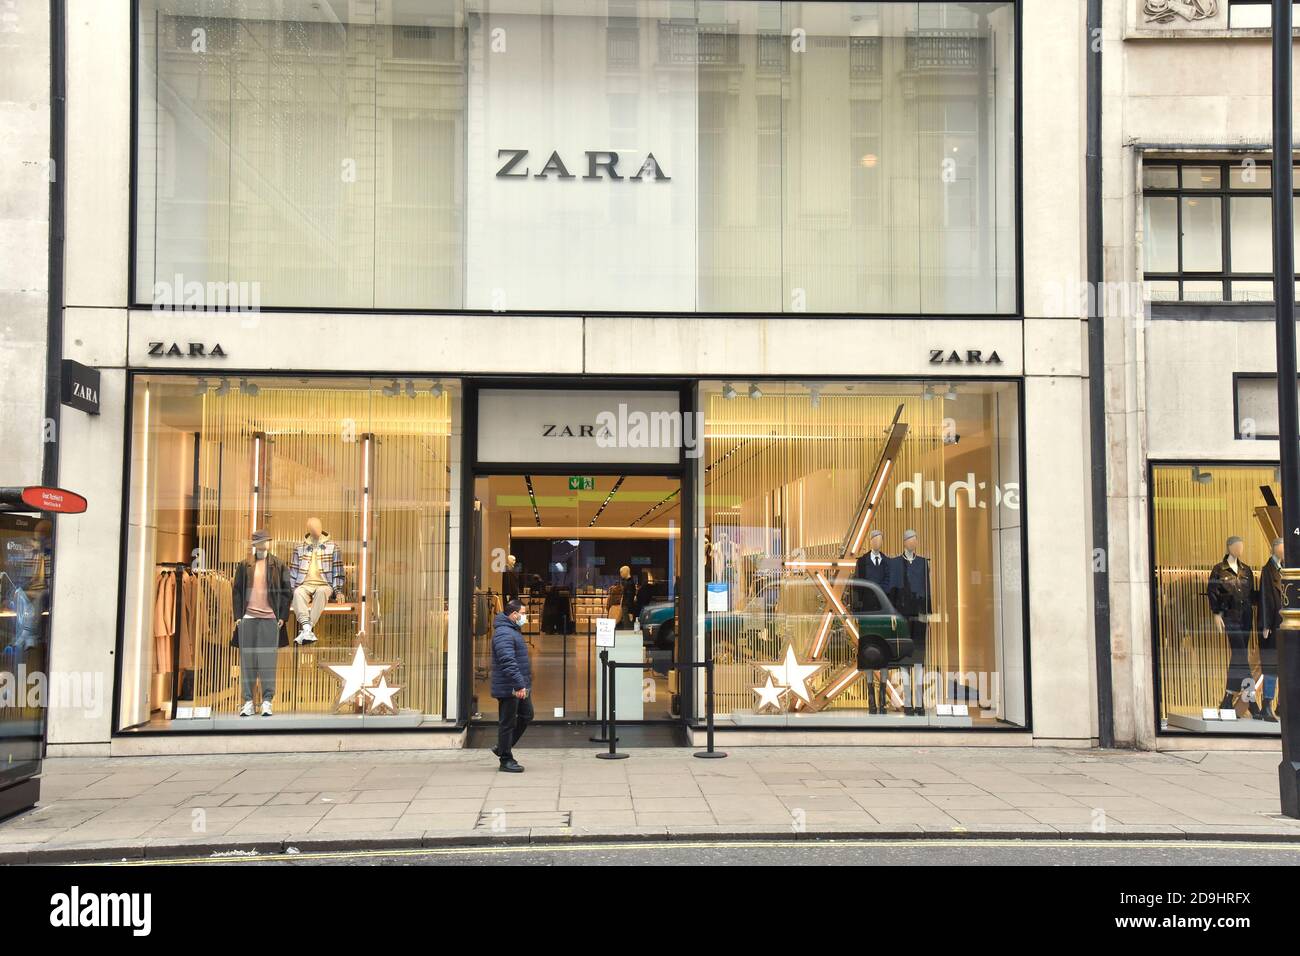 Zara uk hi-res stock photography and images - Alamy